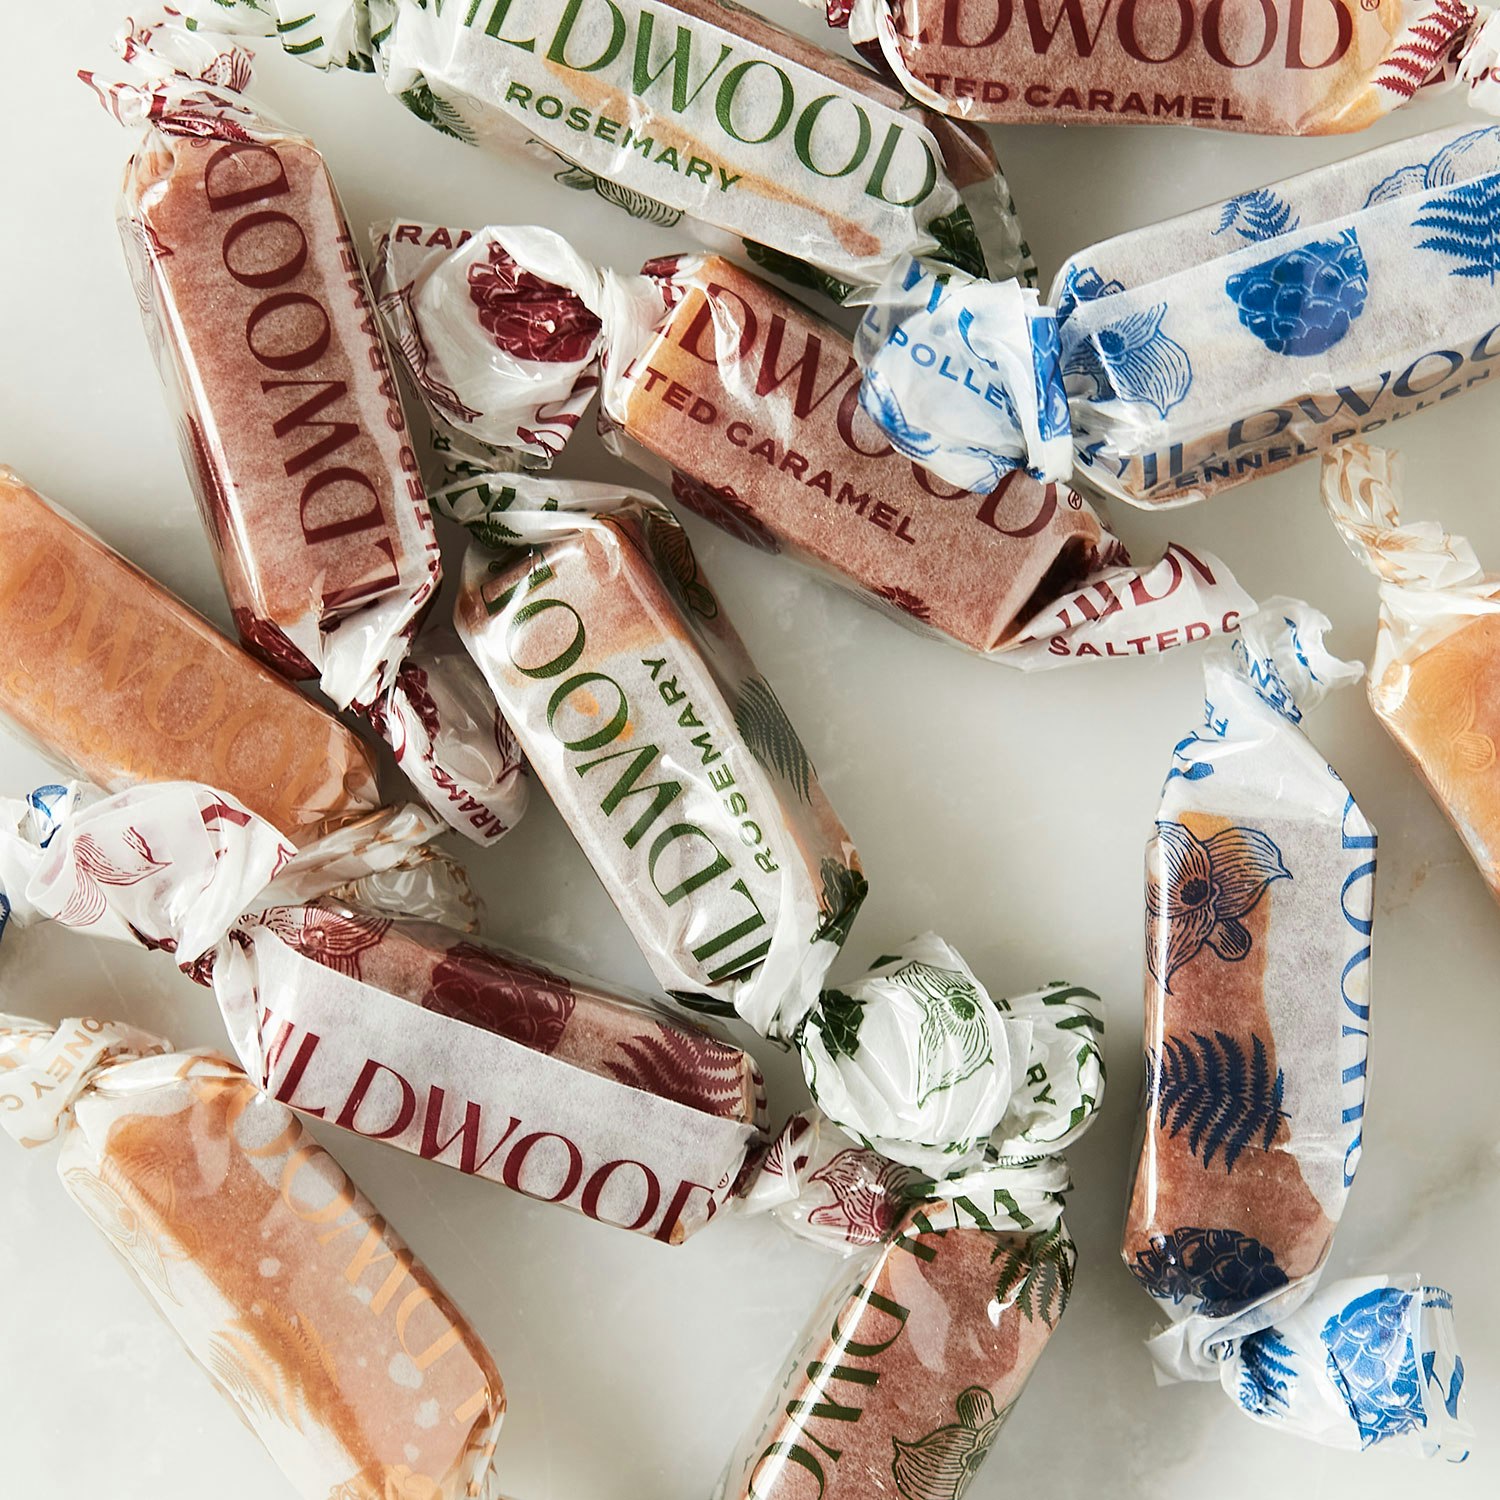 Wildwood Chocolate Original Caramel Collection specialty foods